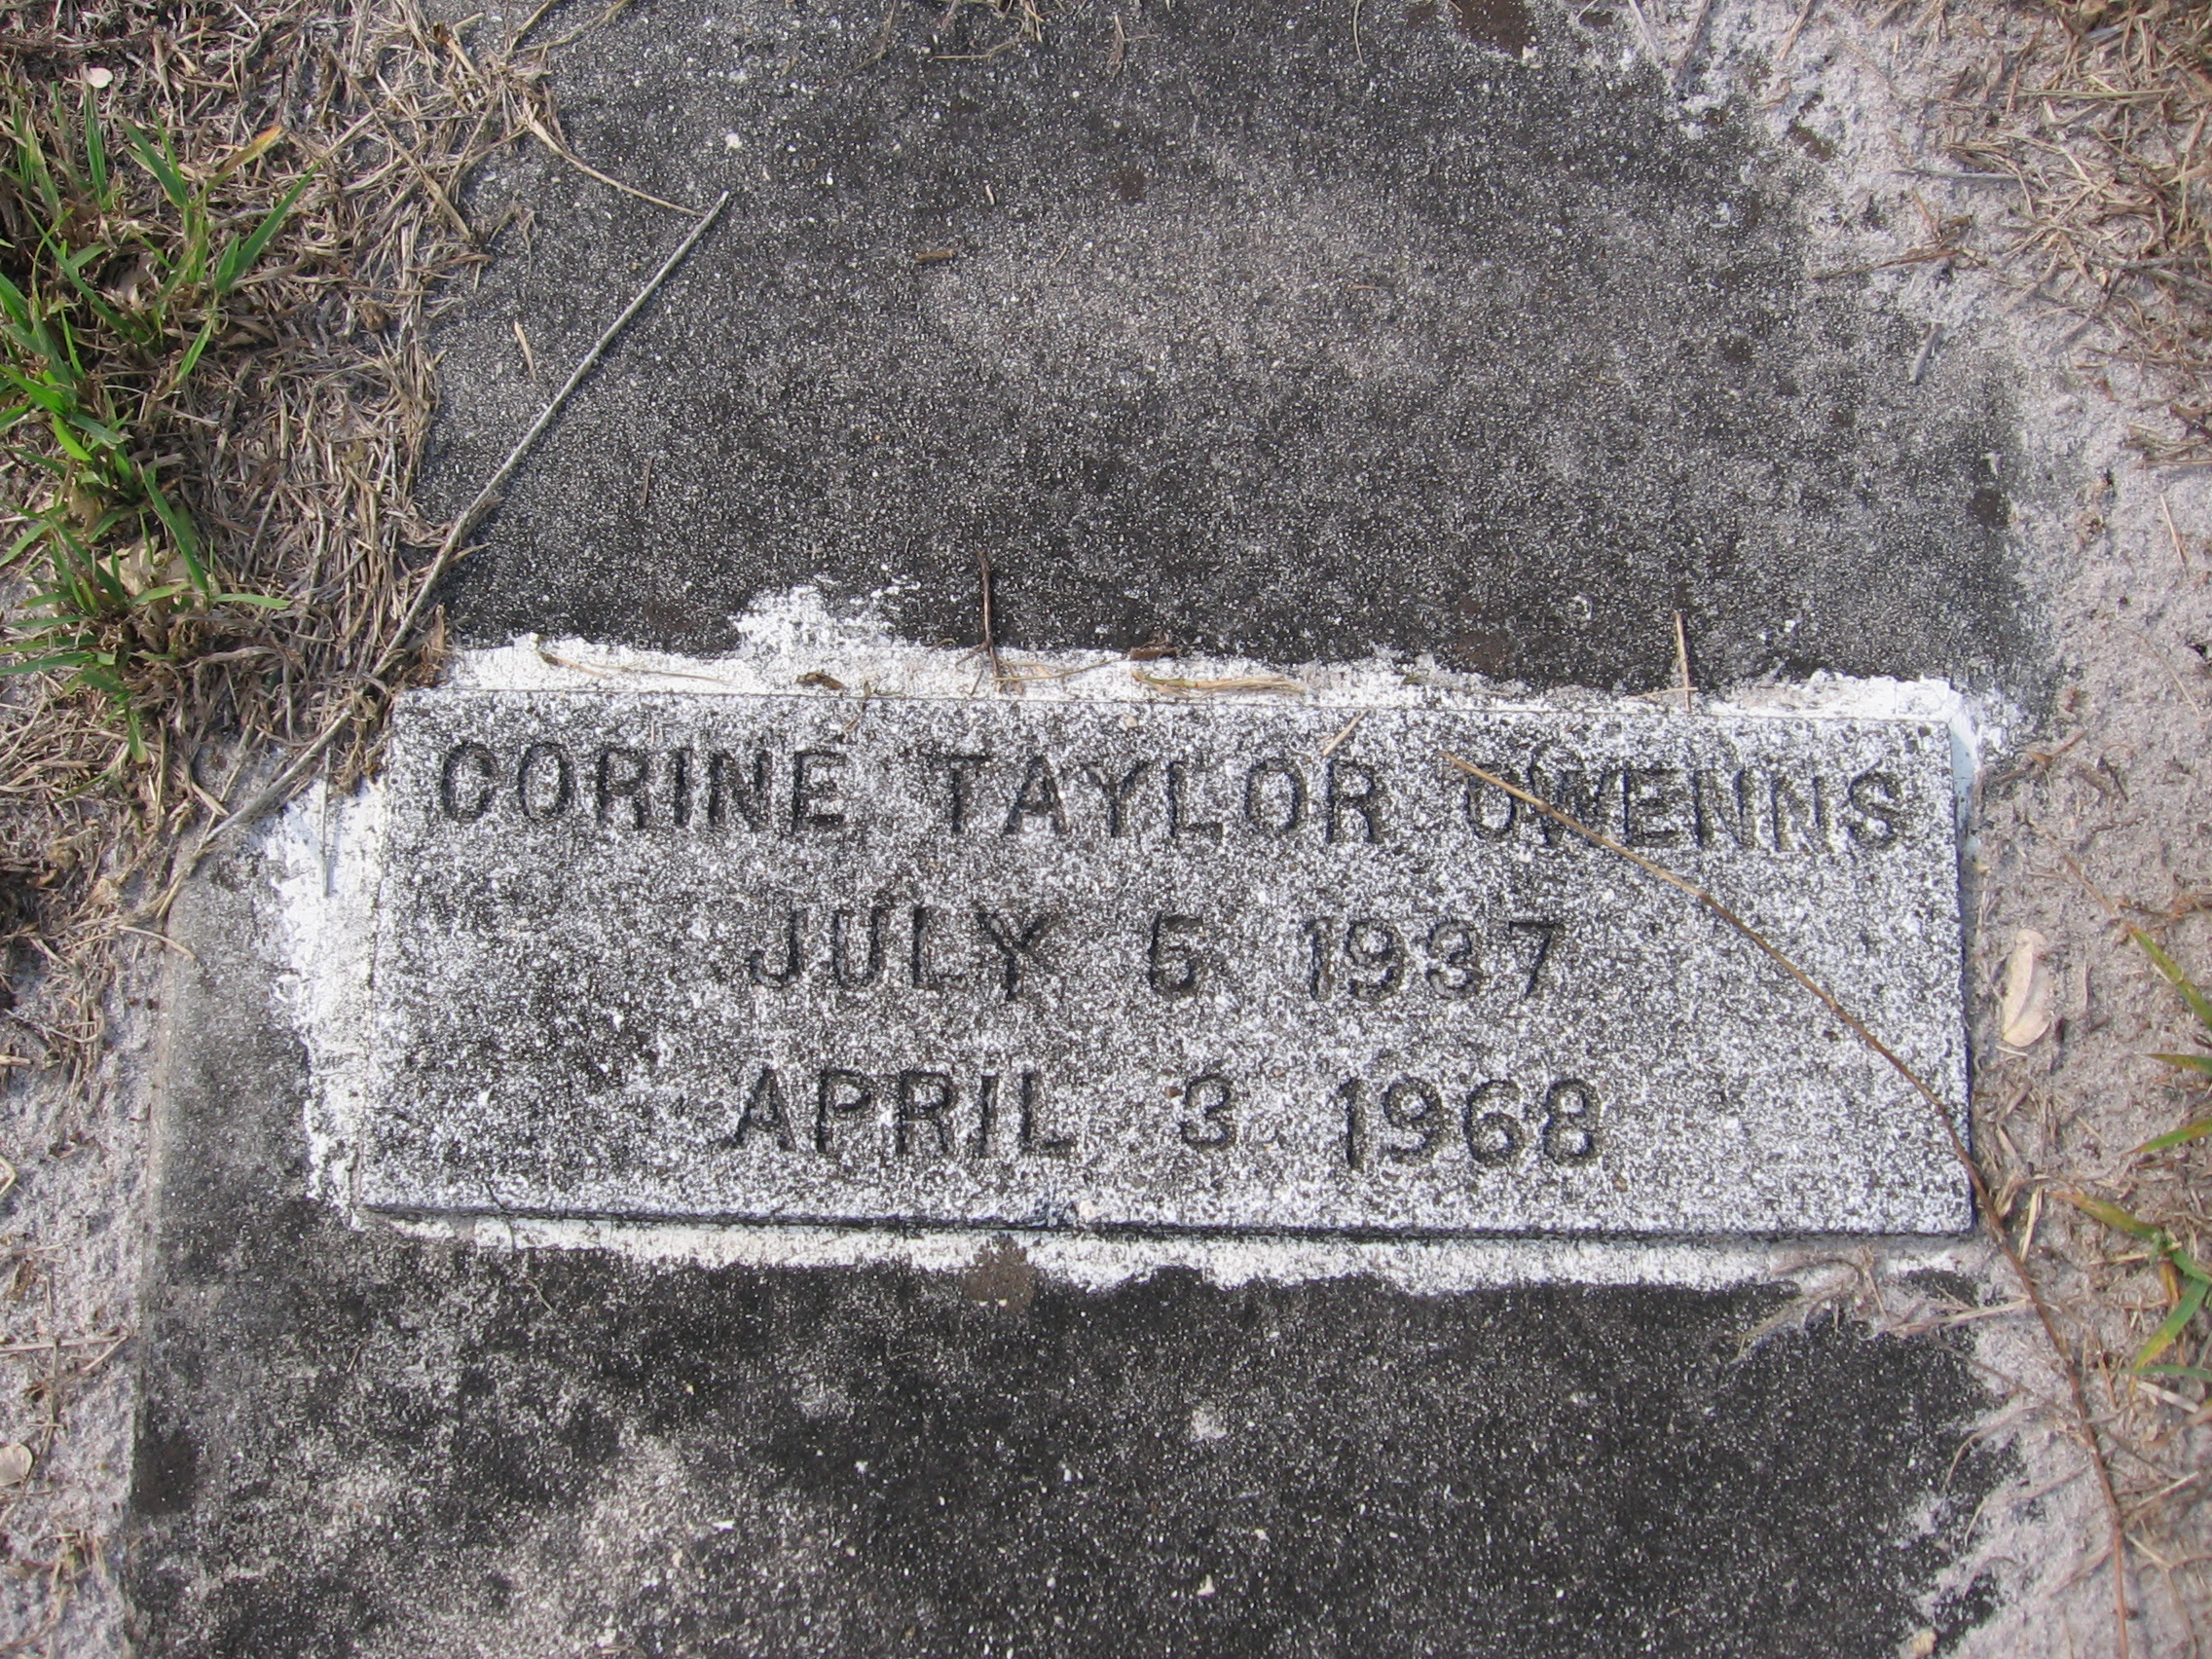 Corine Taylor Owenns